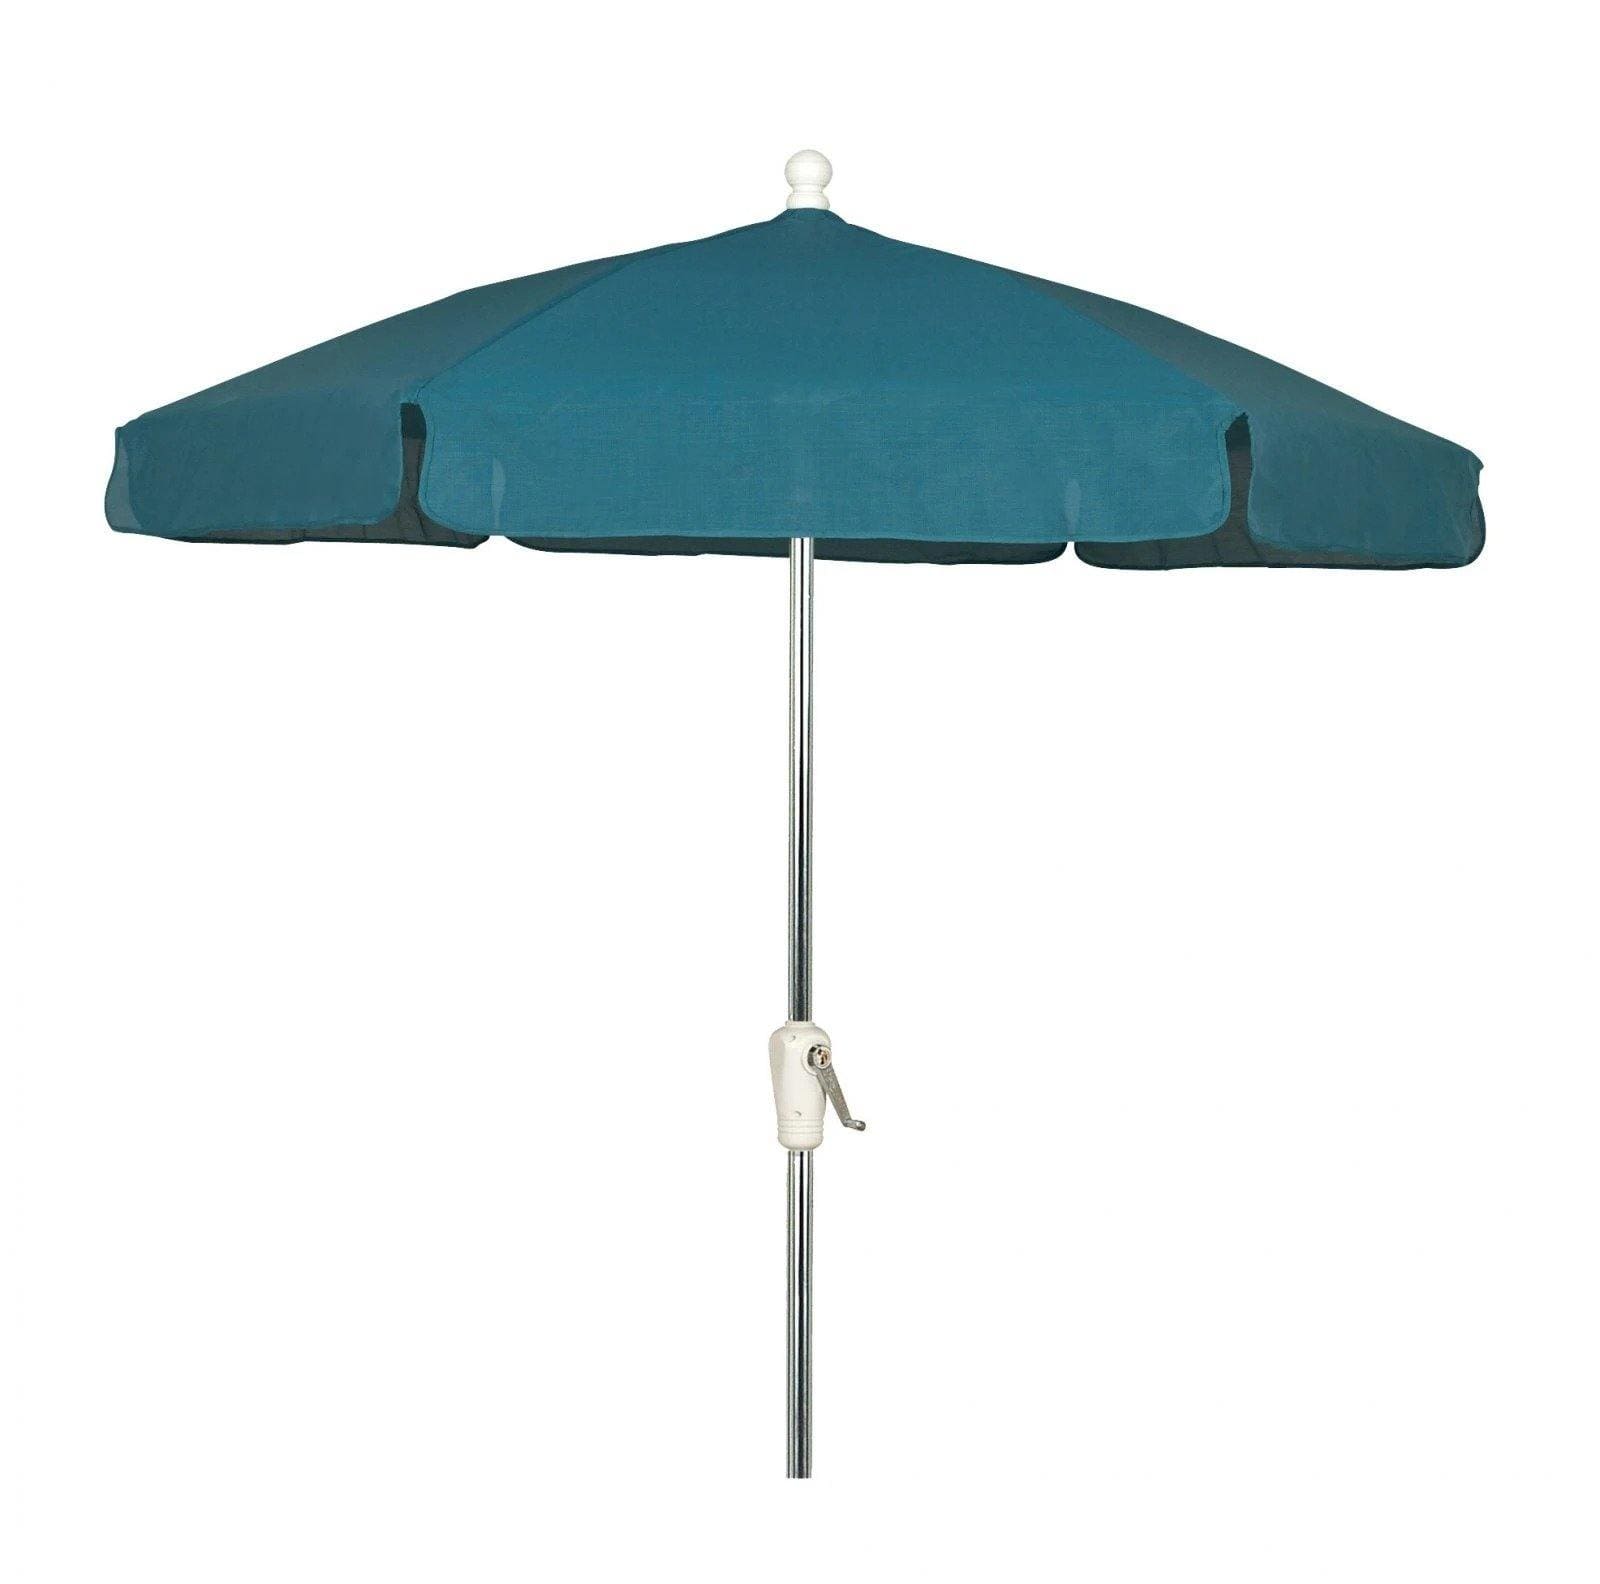 Fiberbuilt Table Umbrellas Teal 7.5' Hex Garden Umbrella 6 Rib Push Up Champagne Bronze wit Vinyl Coated Weave Canopy